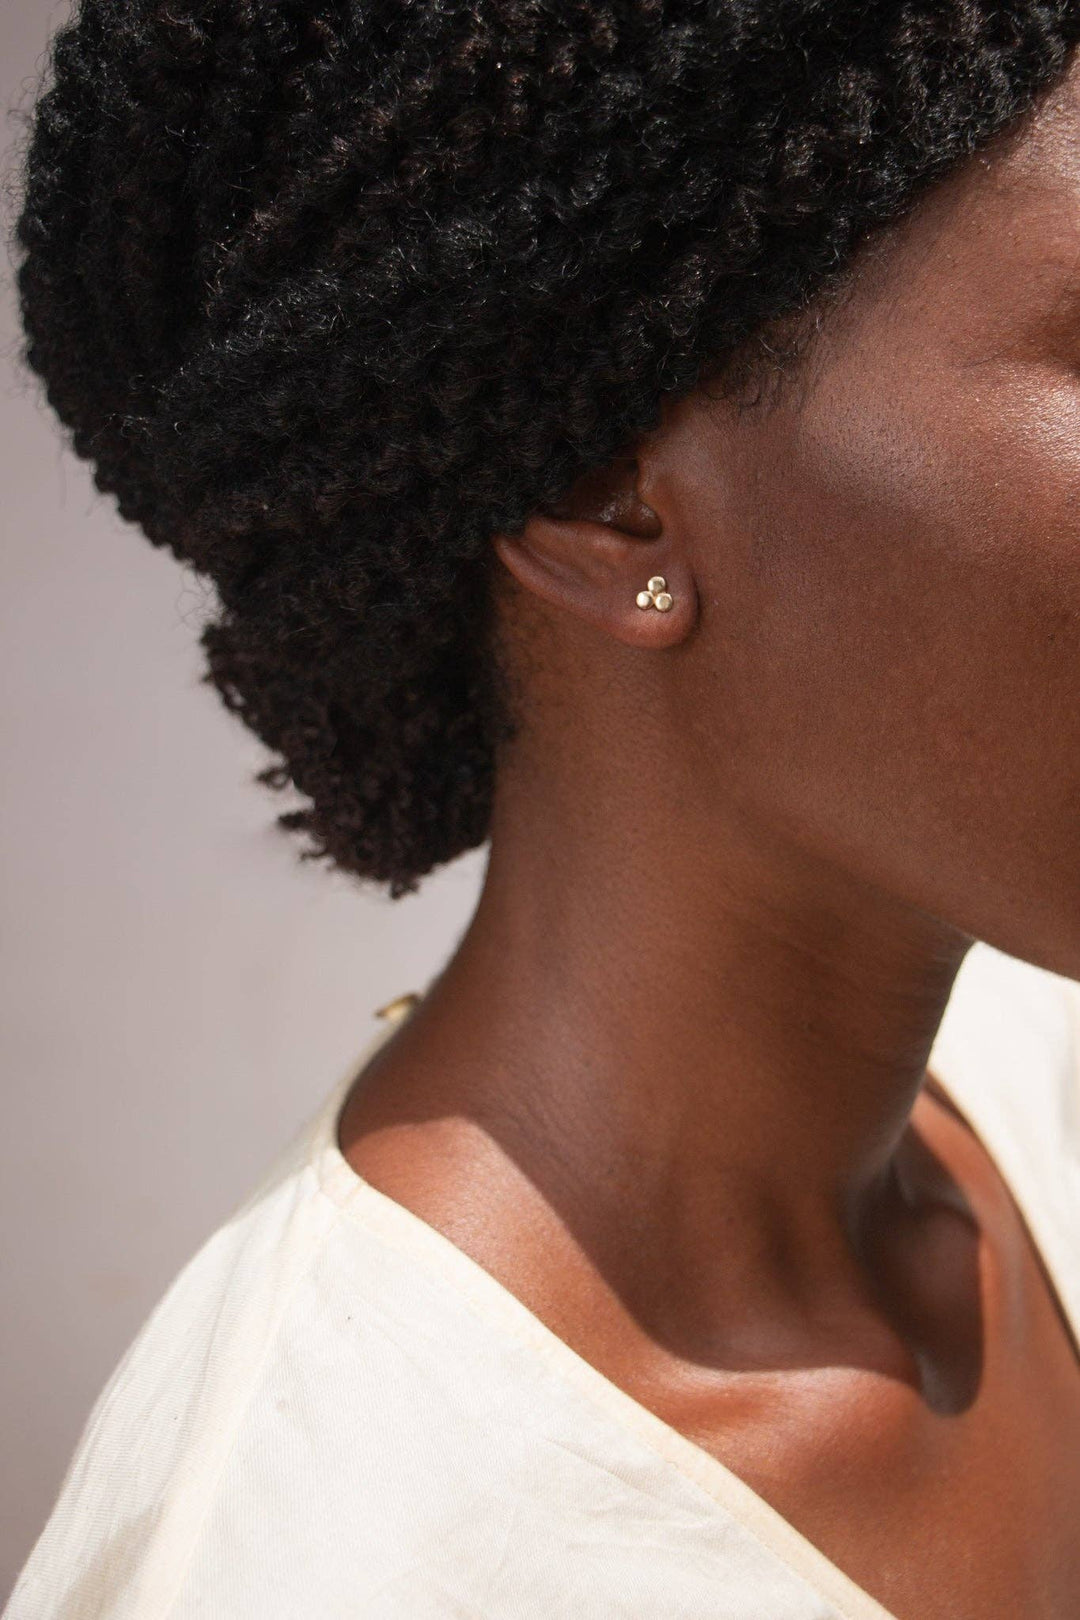 black women with twist updo style wearing light shirt, three dot earrings in pyramid shape